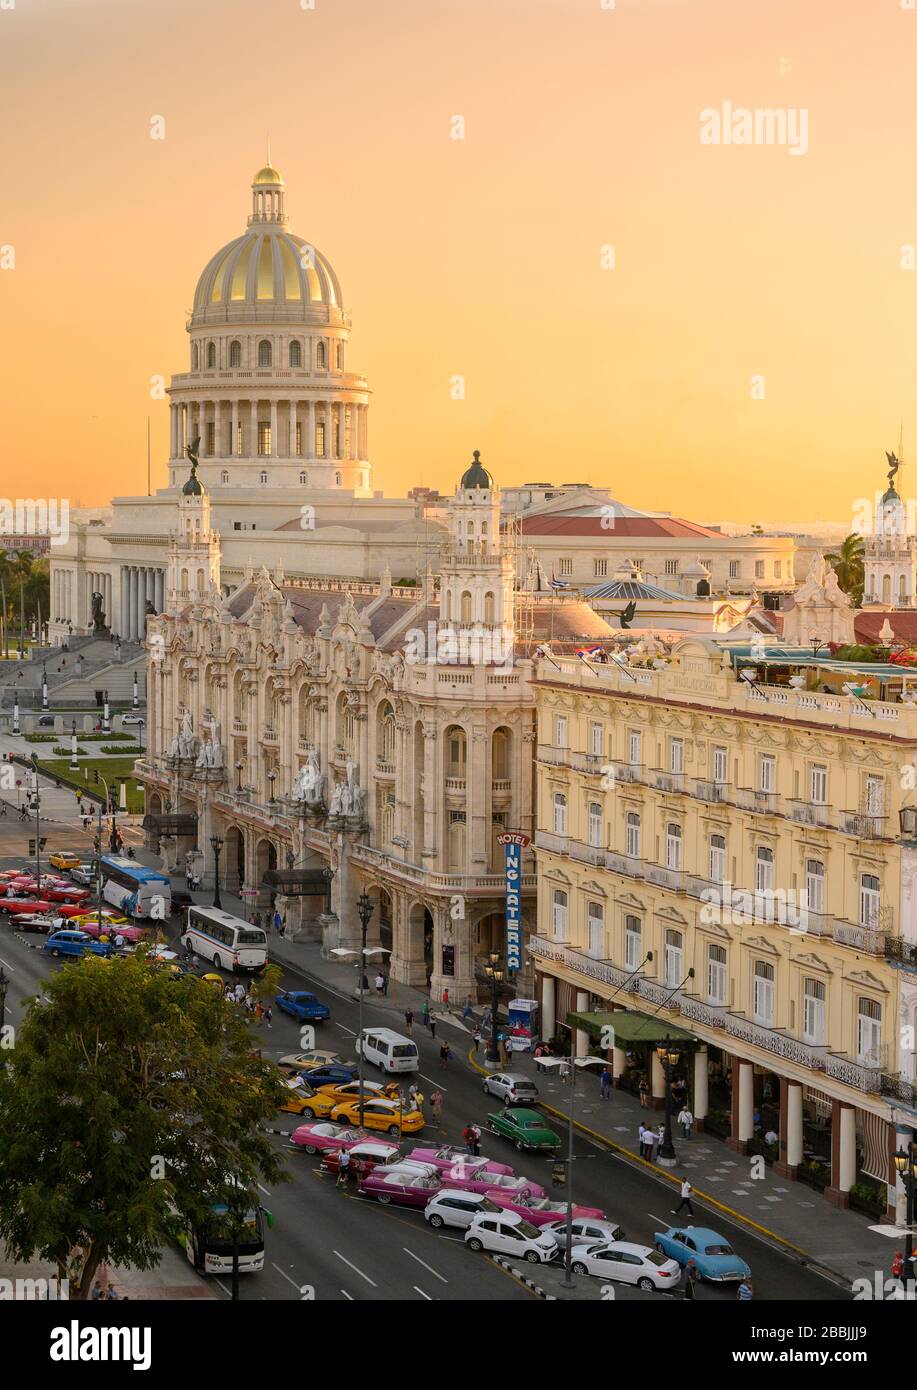 El Capitolio or the National Capitol Building,  Gran Teatro de La Habana, and the Hotel Inglaterra,  Havana, Cuba Stock Photo